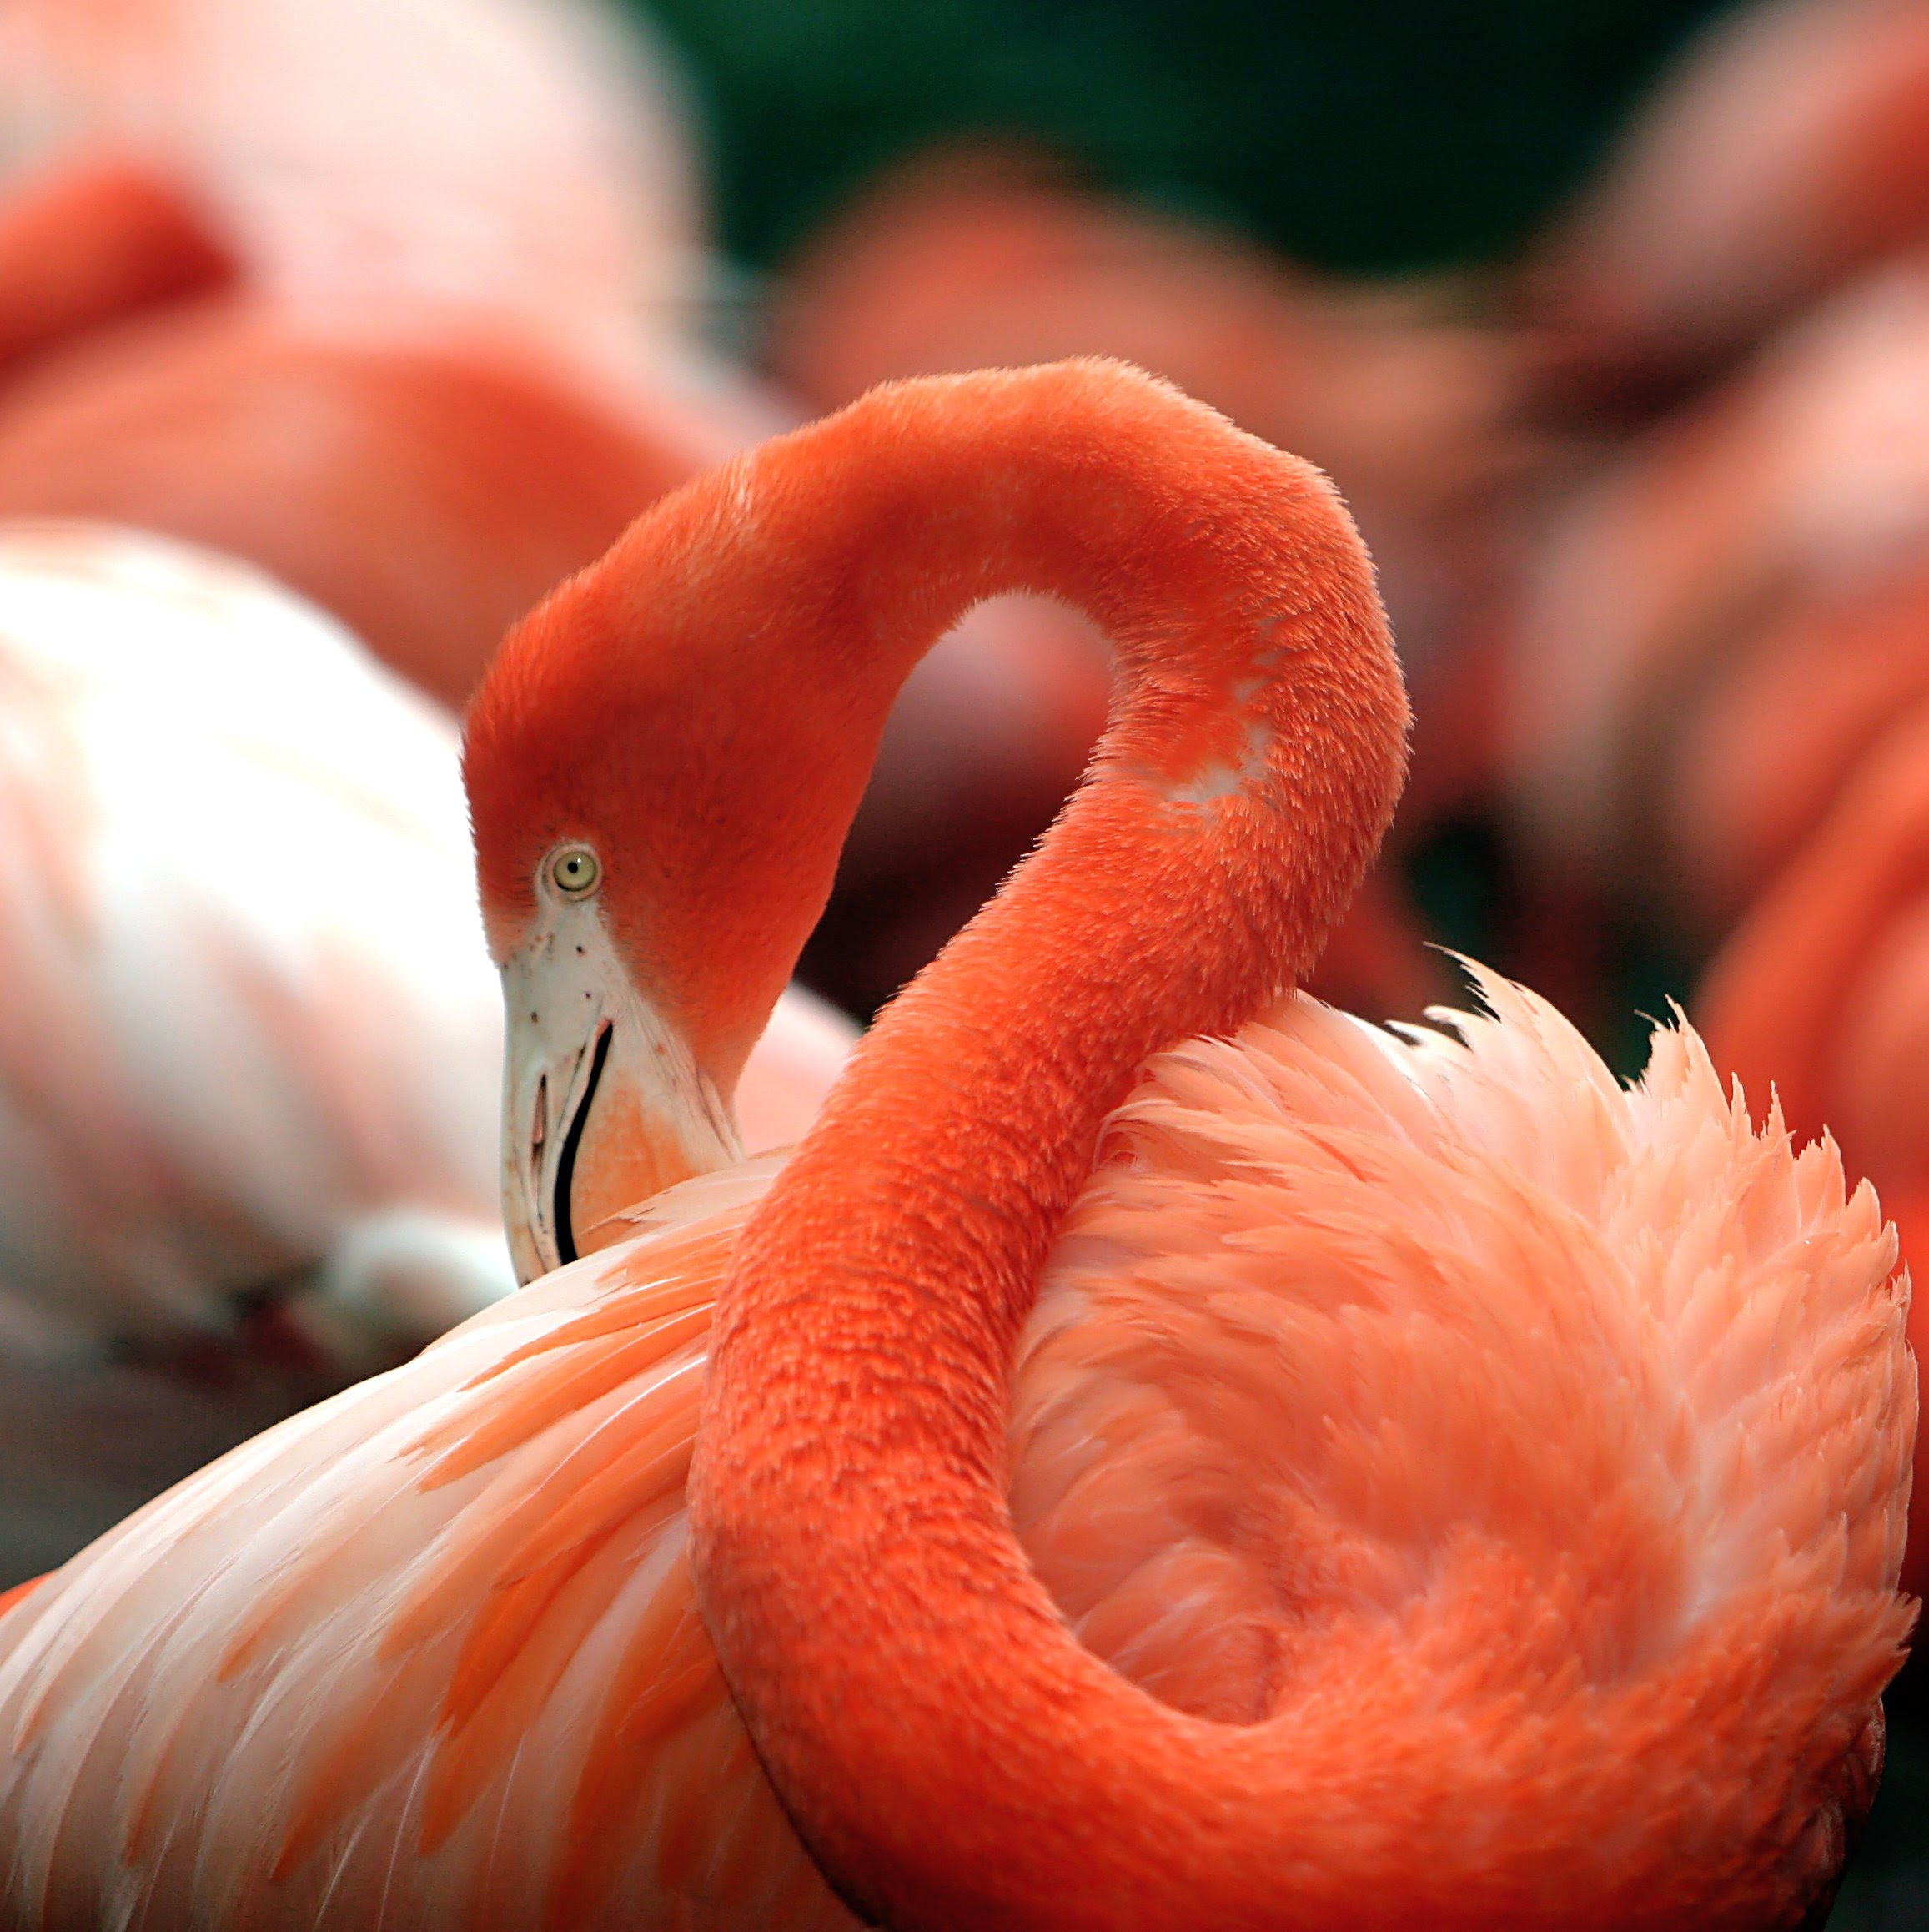 http://upload.wikimedia.org/wikipedia/commons/7/79/Flamingo_National_Zoo.jpg